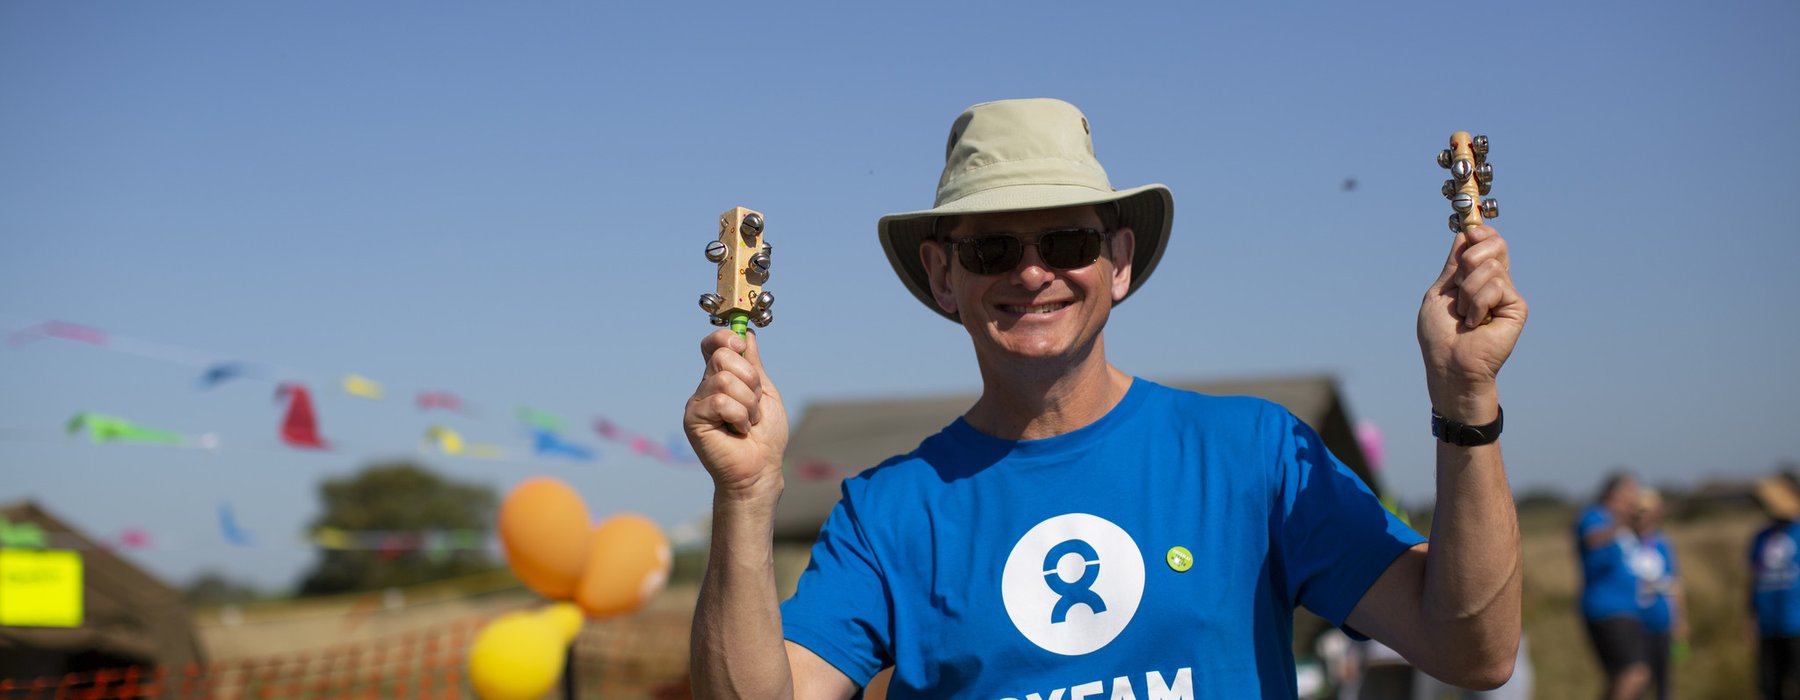 An Oxfam volunteer at Trailwalker 2019